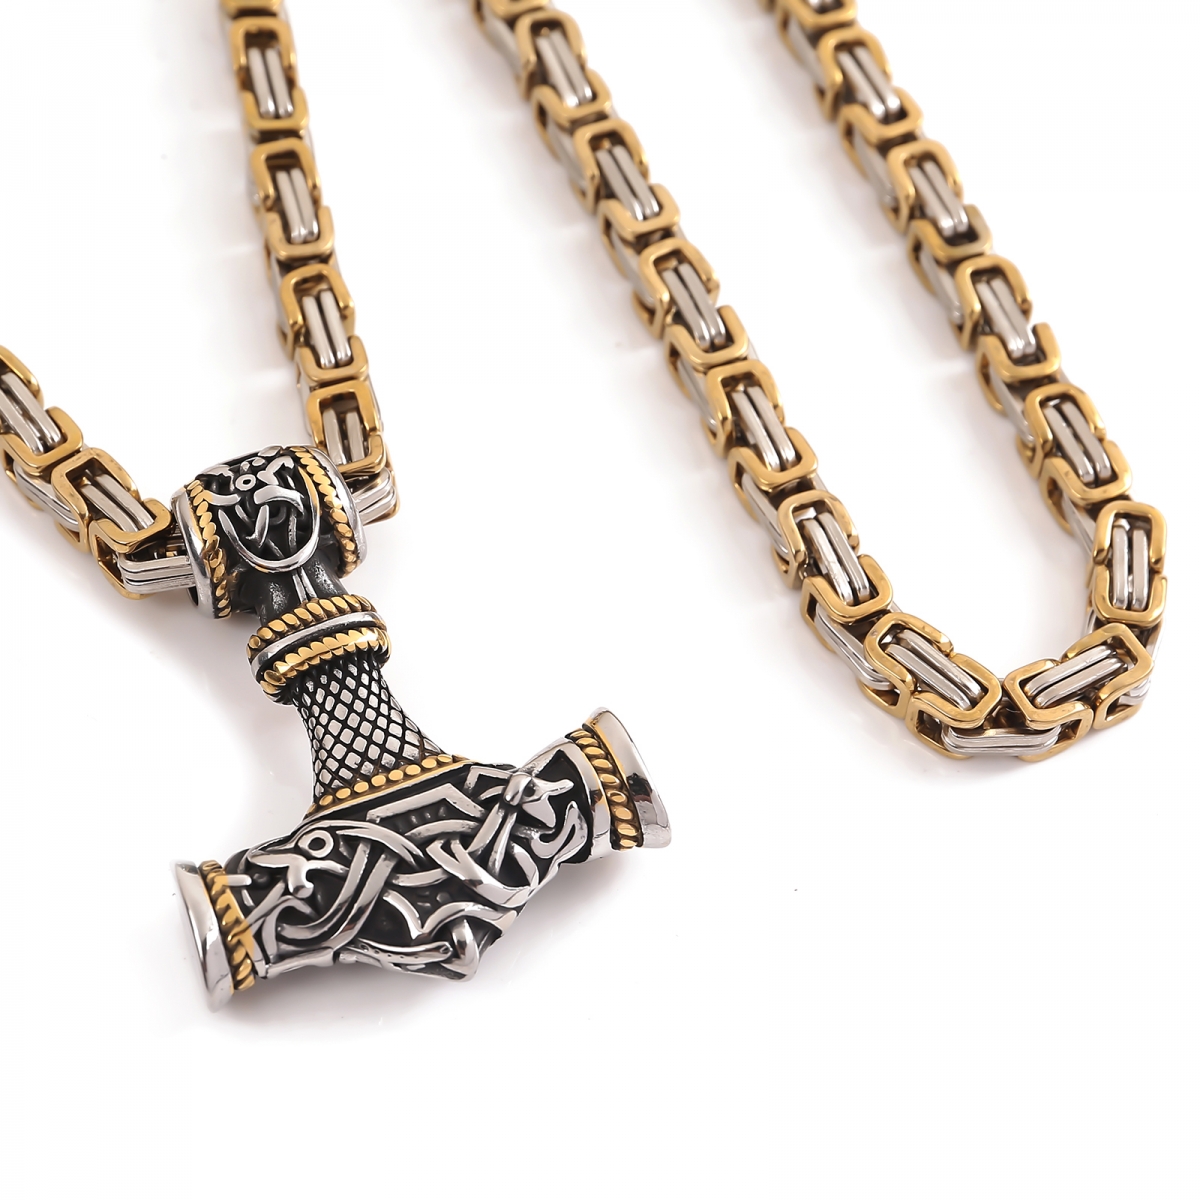 Giant Mjolnir Necklace US$9/PC-NORSECOLLECTION- Viking Jewelry,Viking Necklace,Viking Bracelet,Viking Rings,Viking Mugs,Viking Accessories,Viking Crafts